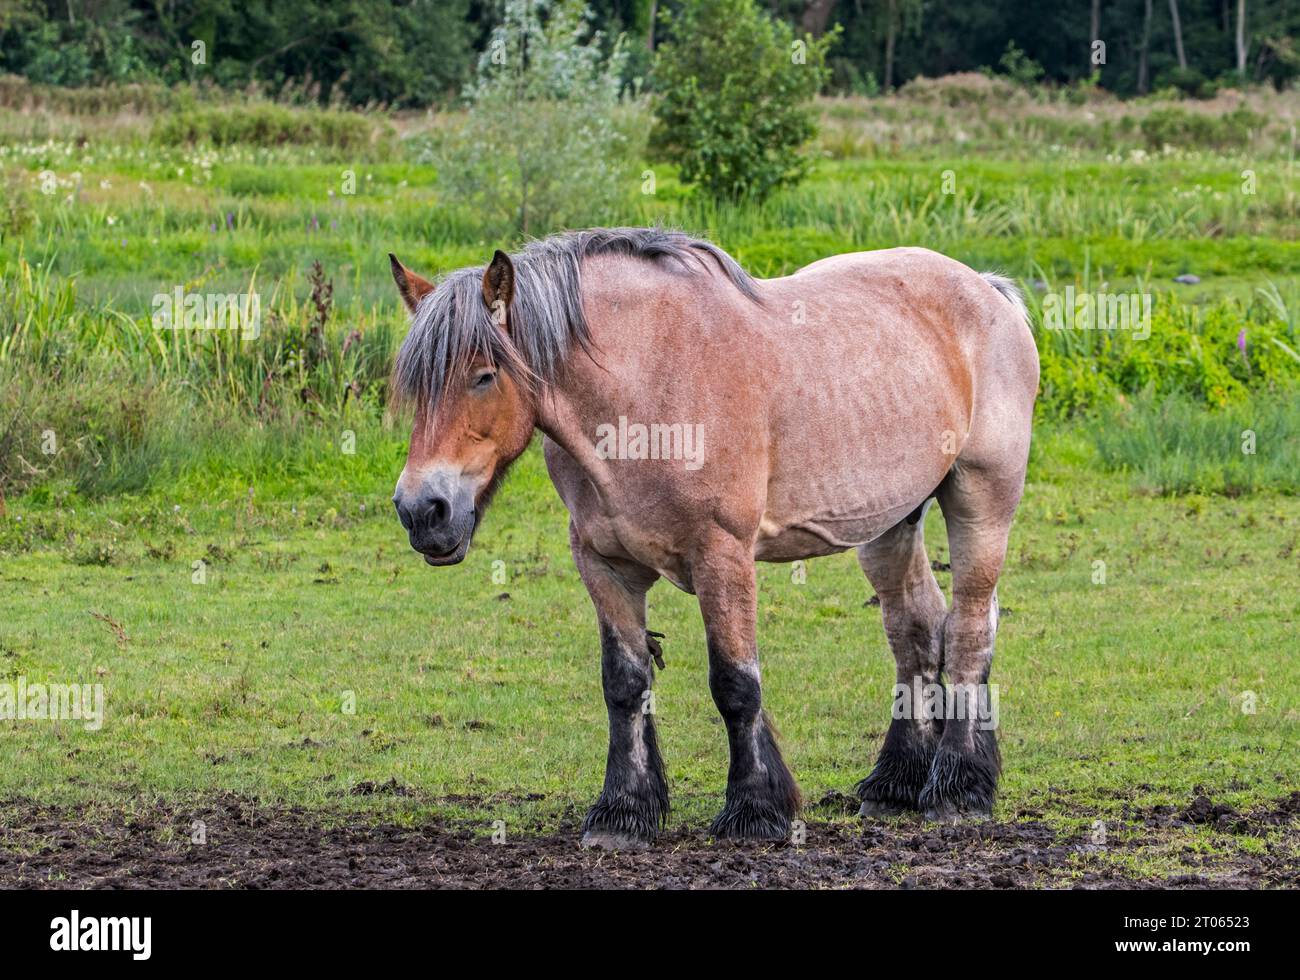 Cavallo pescato belga / Belgisch Trekpaard / belge tratto nella riserva naturale Bourgoyen-Ossemeersen vicino a Gand in estate, Fiandre Orientali, Belgio Foto Stock